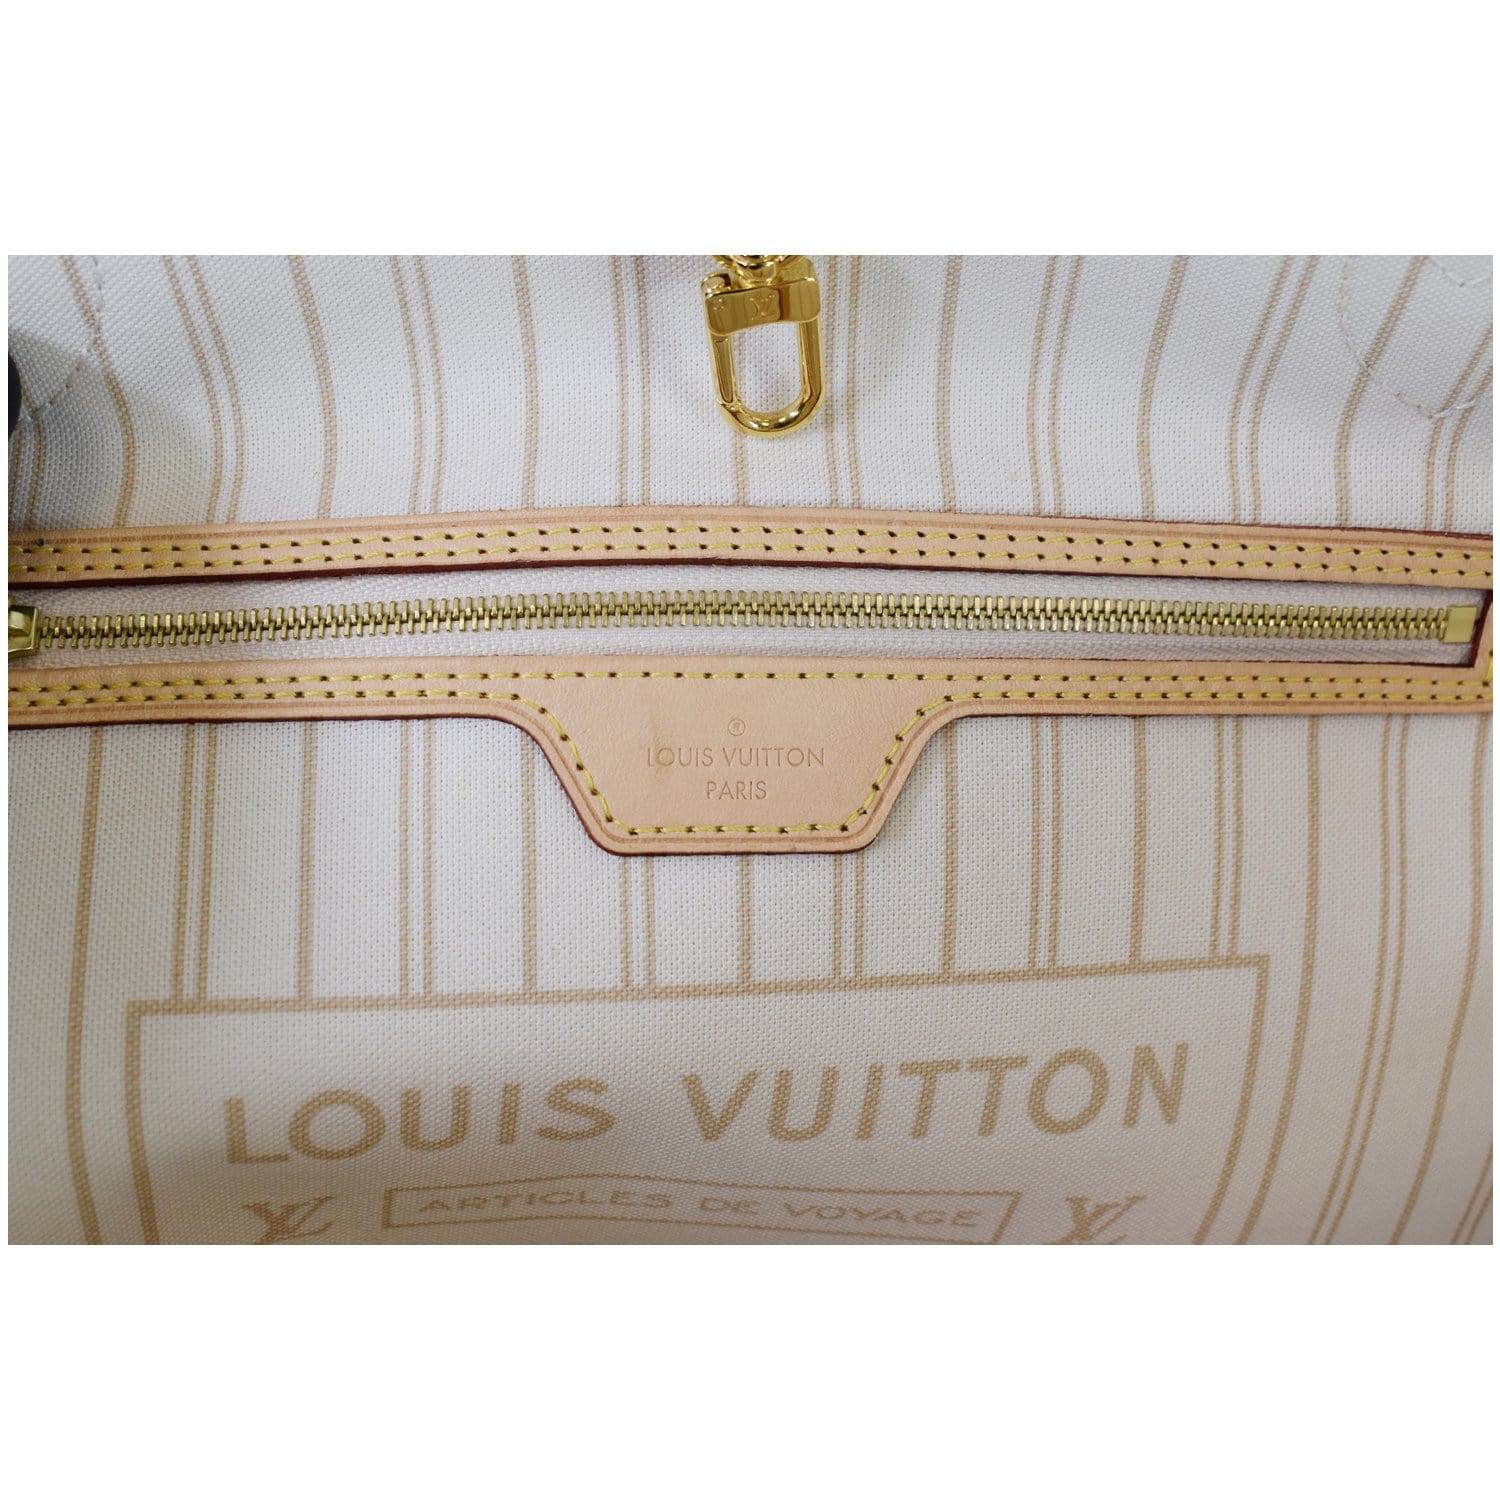 LOUIS VUITTON NEVERFULL MM Damier Azur Tote bag No.1184-e